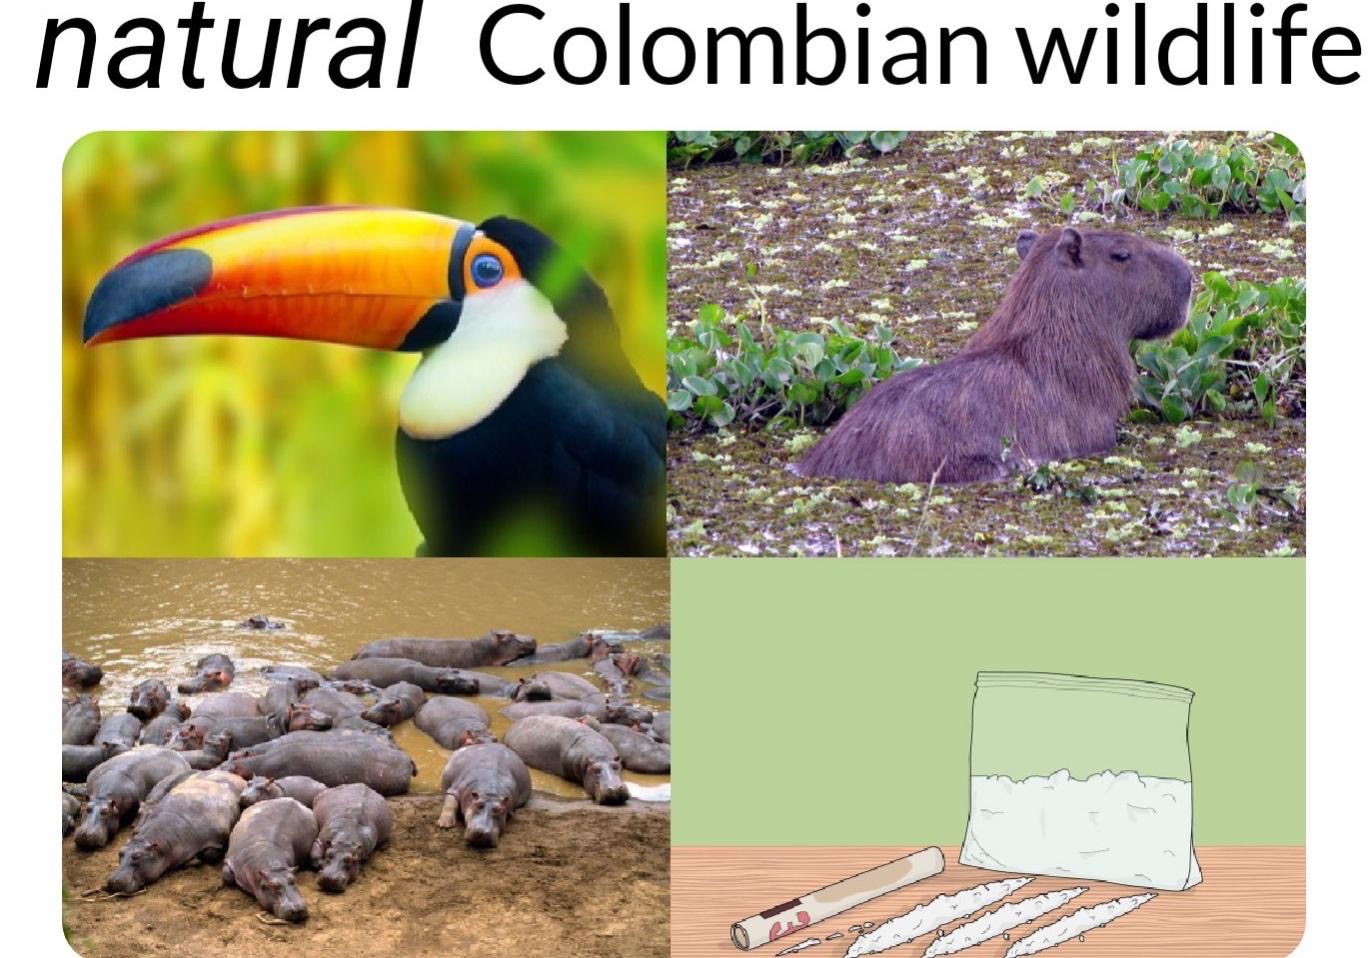 fauna - natural Colombian wildlife 0